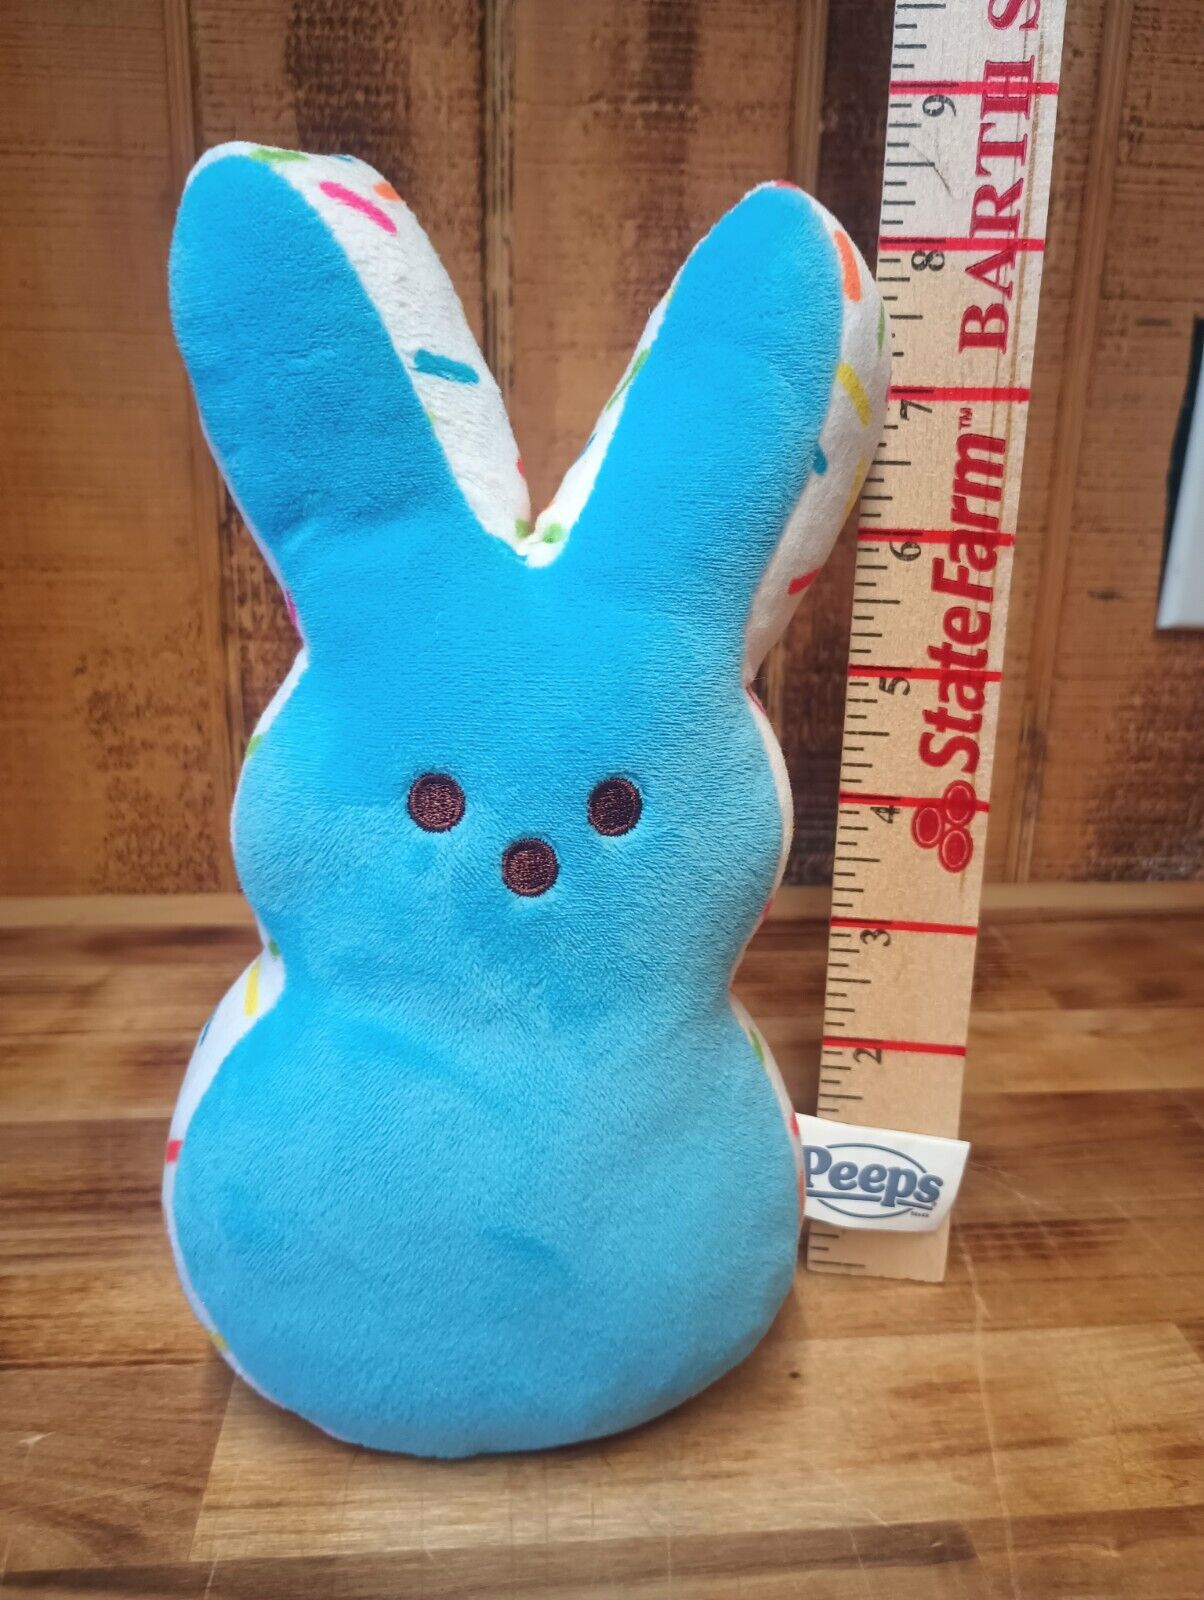 Ruz PEEPS 9” Easter Bunny Plush 2021 Blue with multi-colored sprinkles